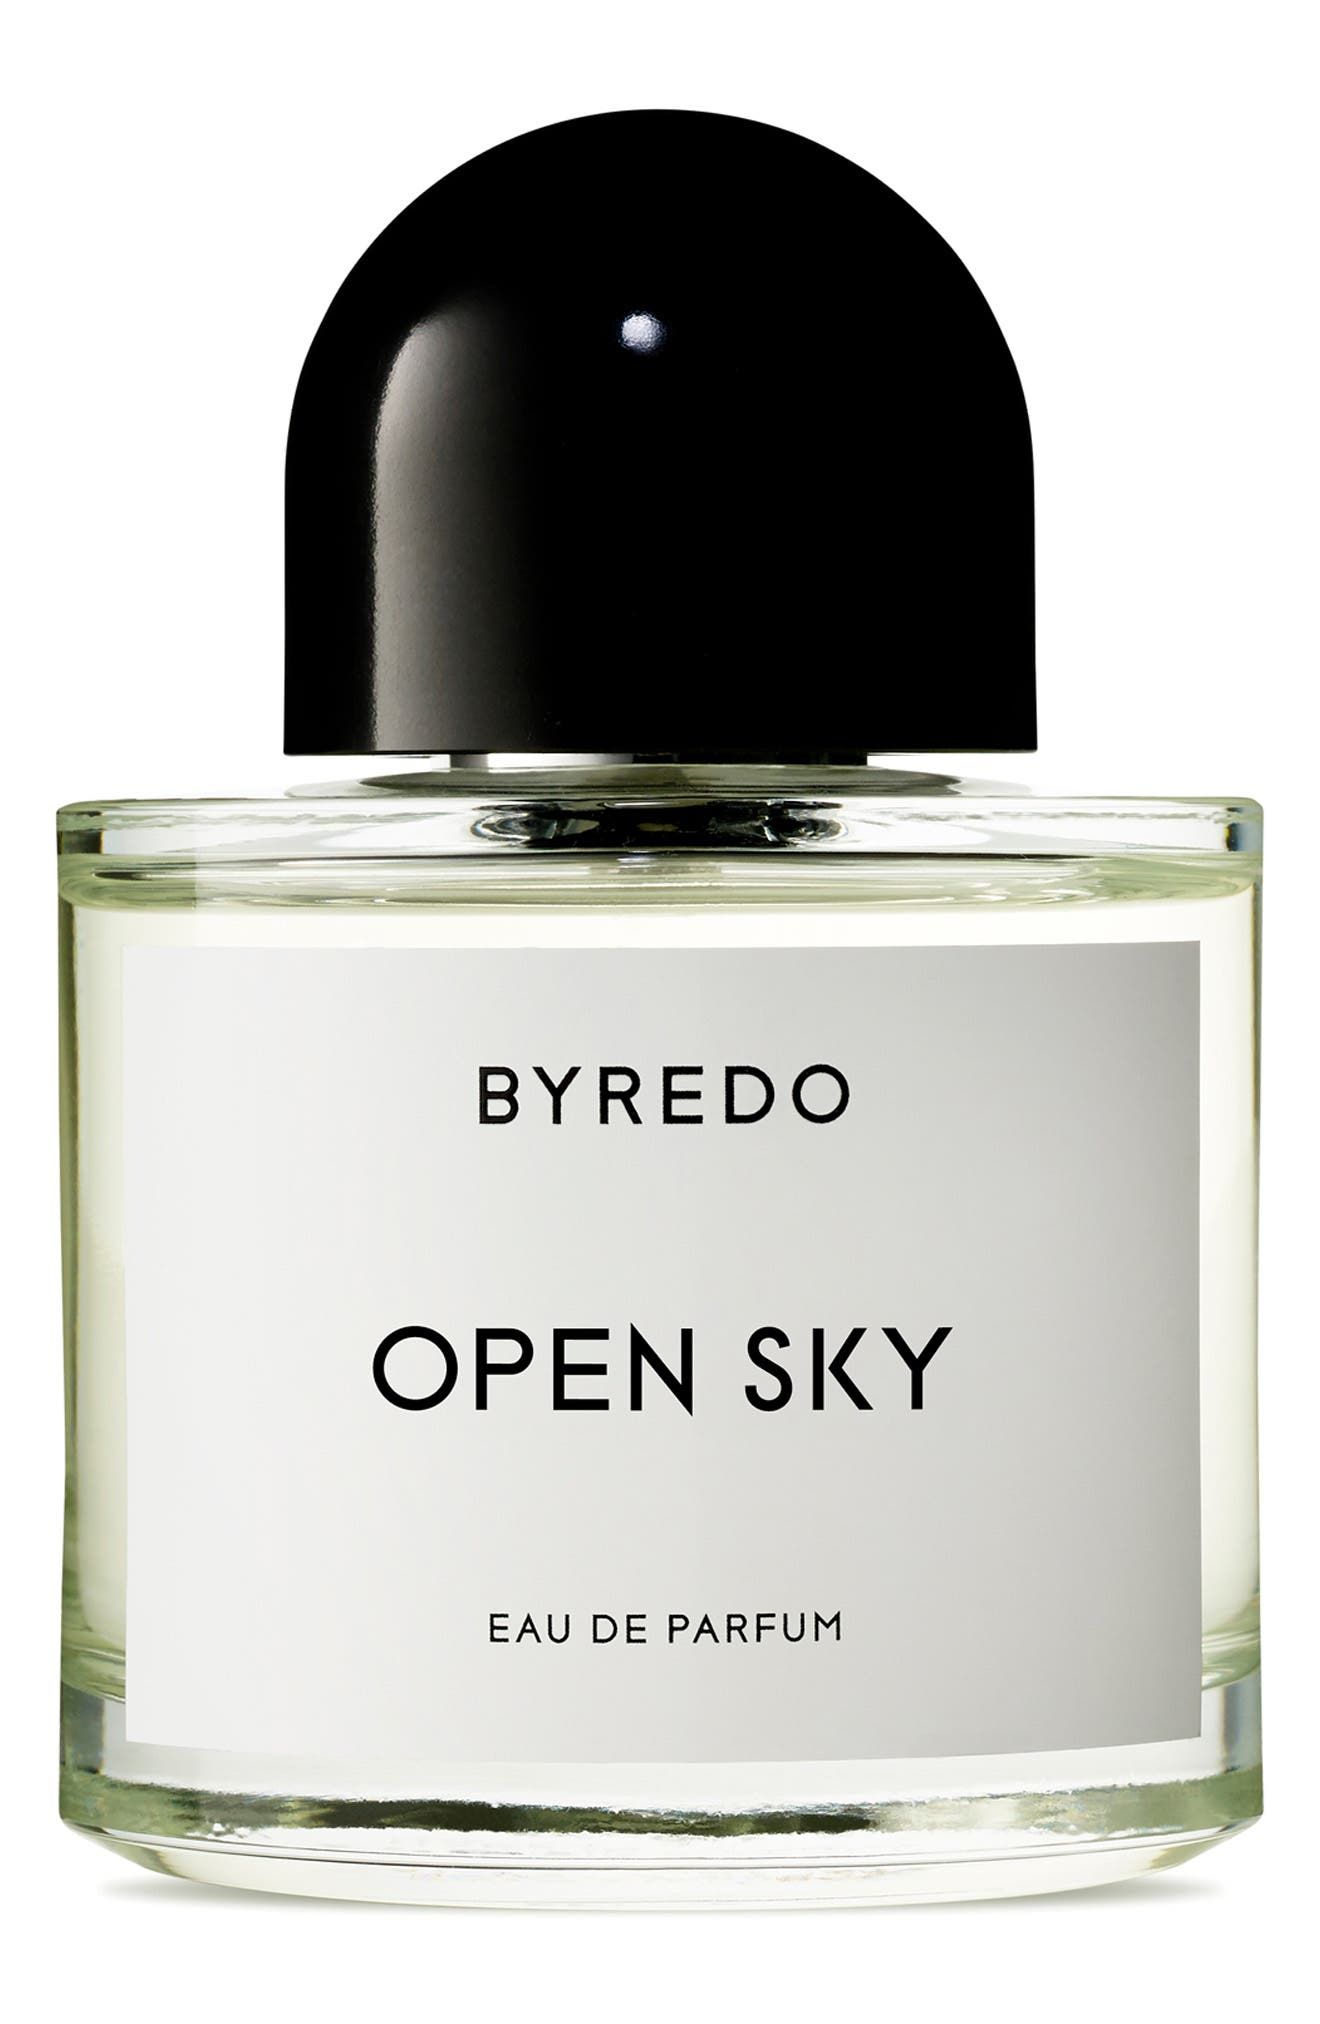 BYREDO Open Sky Eau de Parfum (Nordstrom Exclusive)